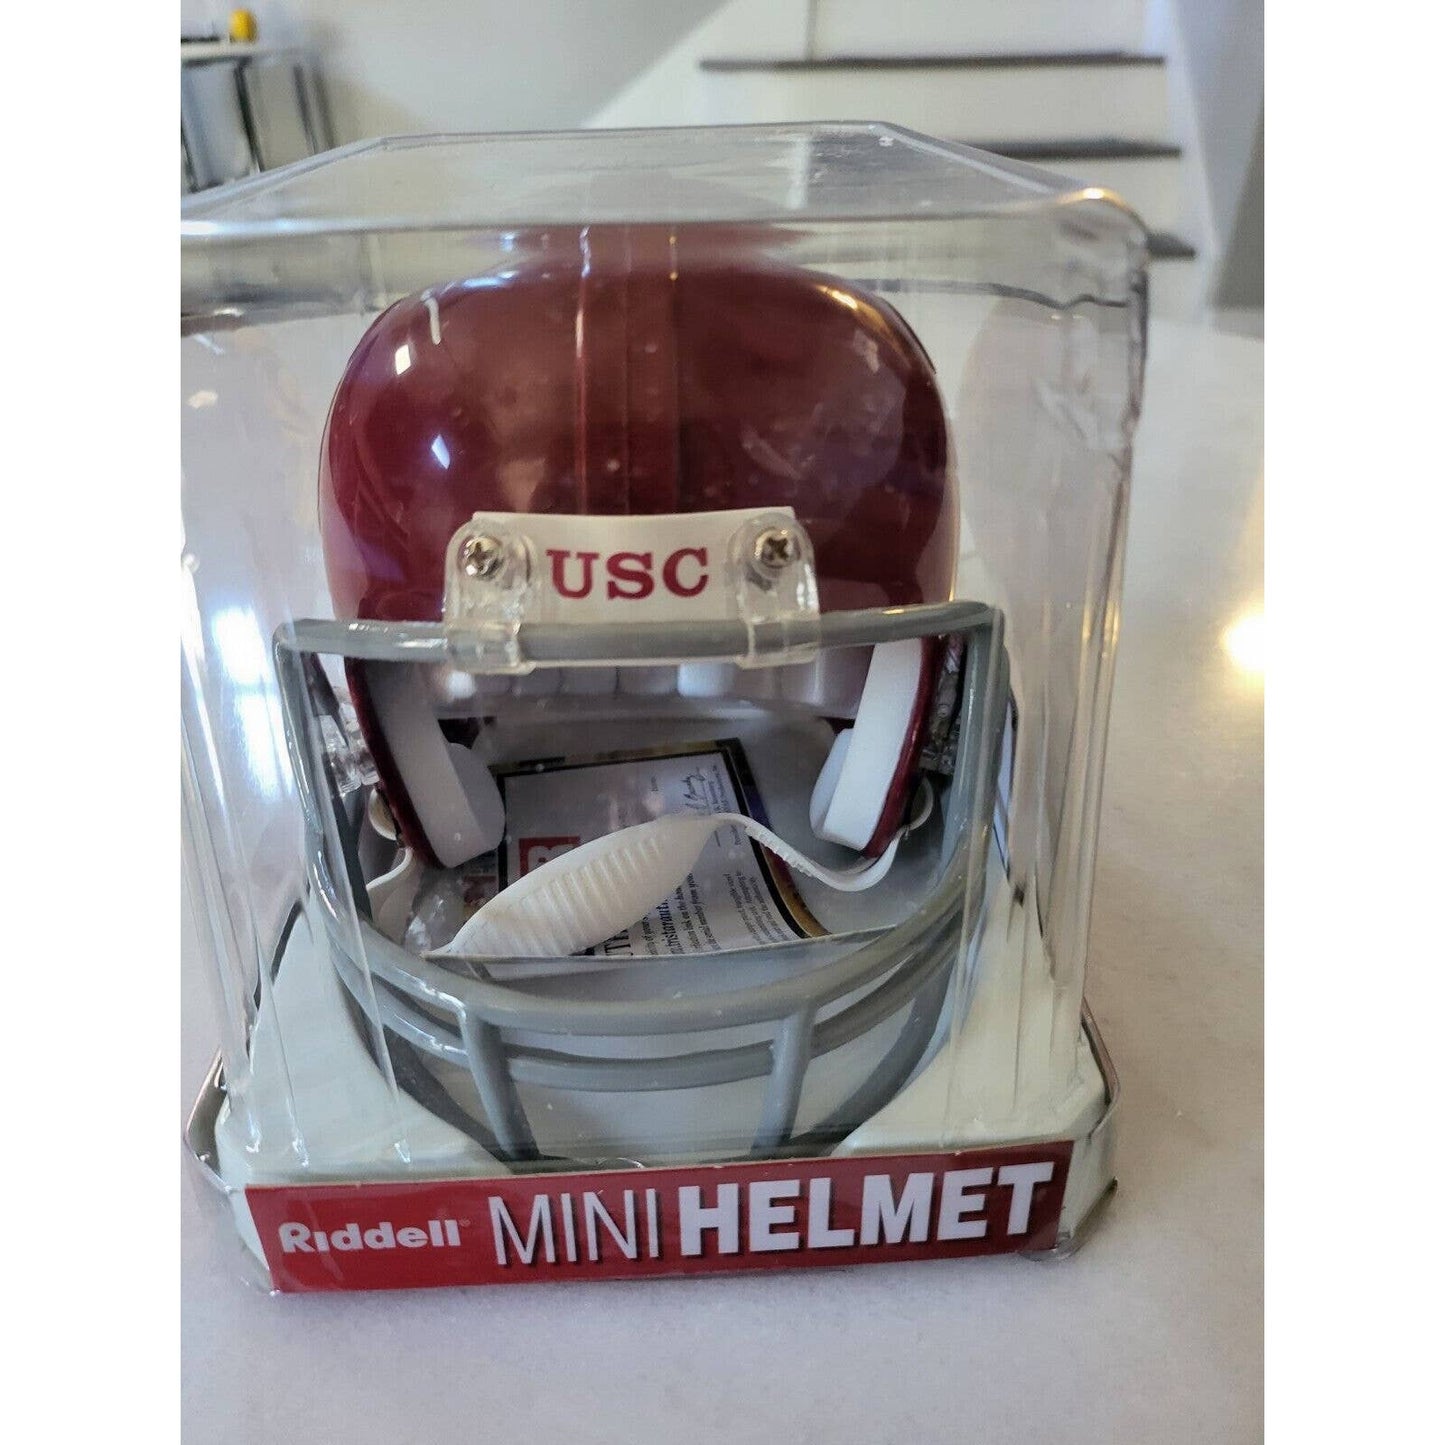 Keith Rivers Autographed/Signed Mini Helmet TRISTAR USC Trojans - TreasuresEvolved